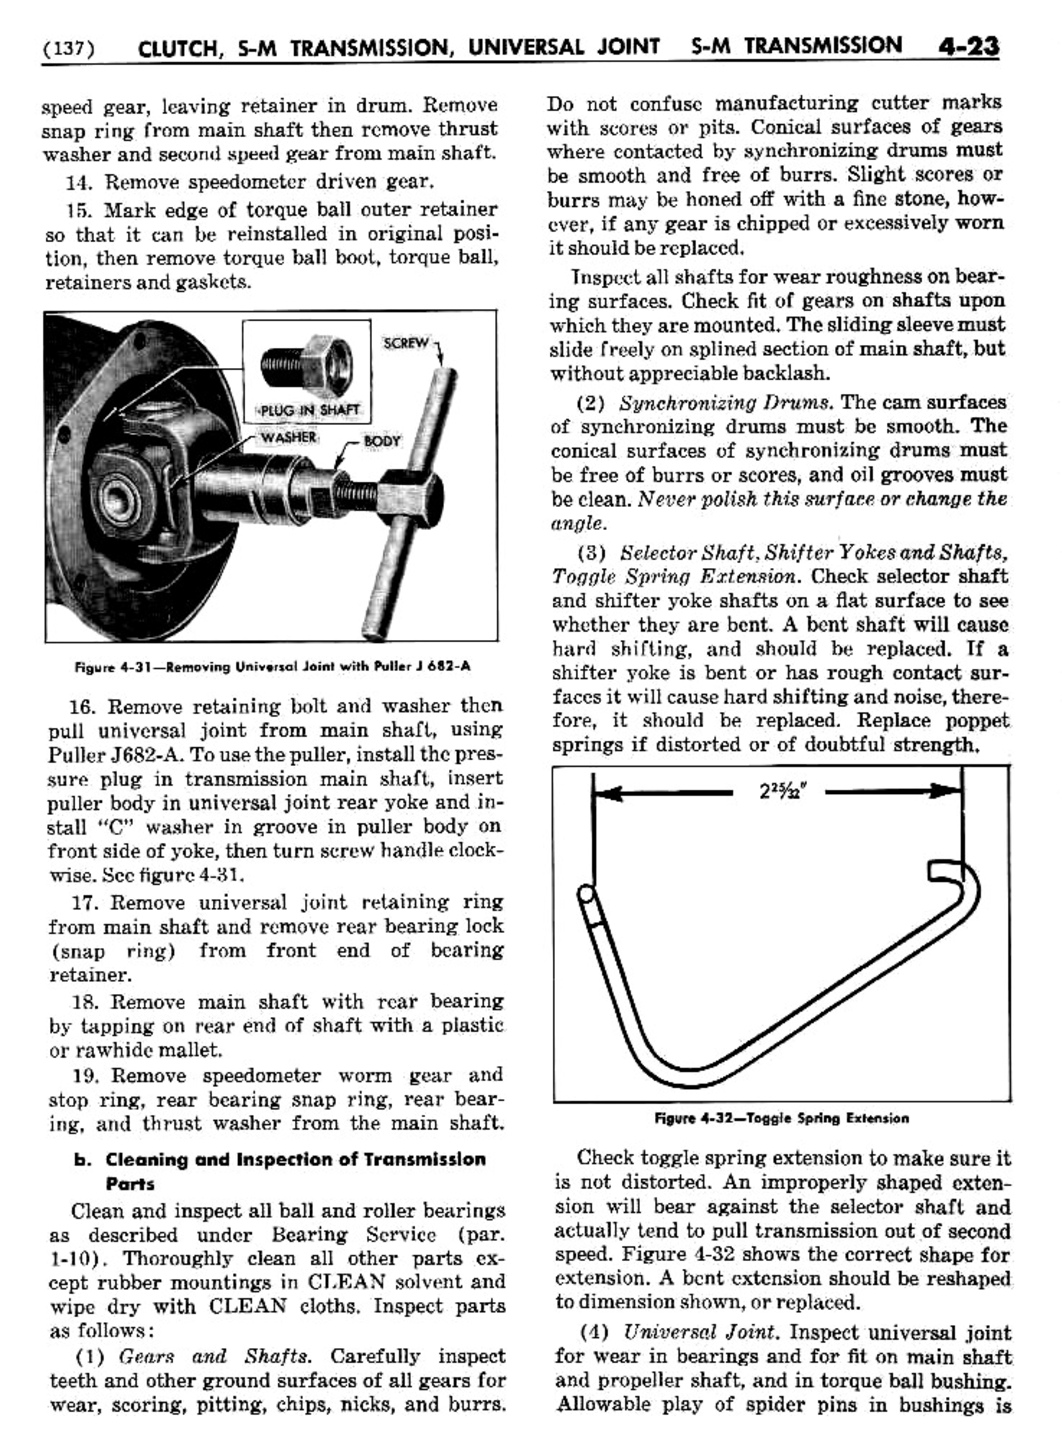 n_05 1955 Buick Shop Manual - Clutch & Trans-023-023.jpg